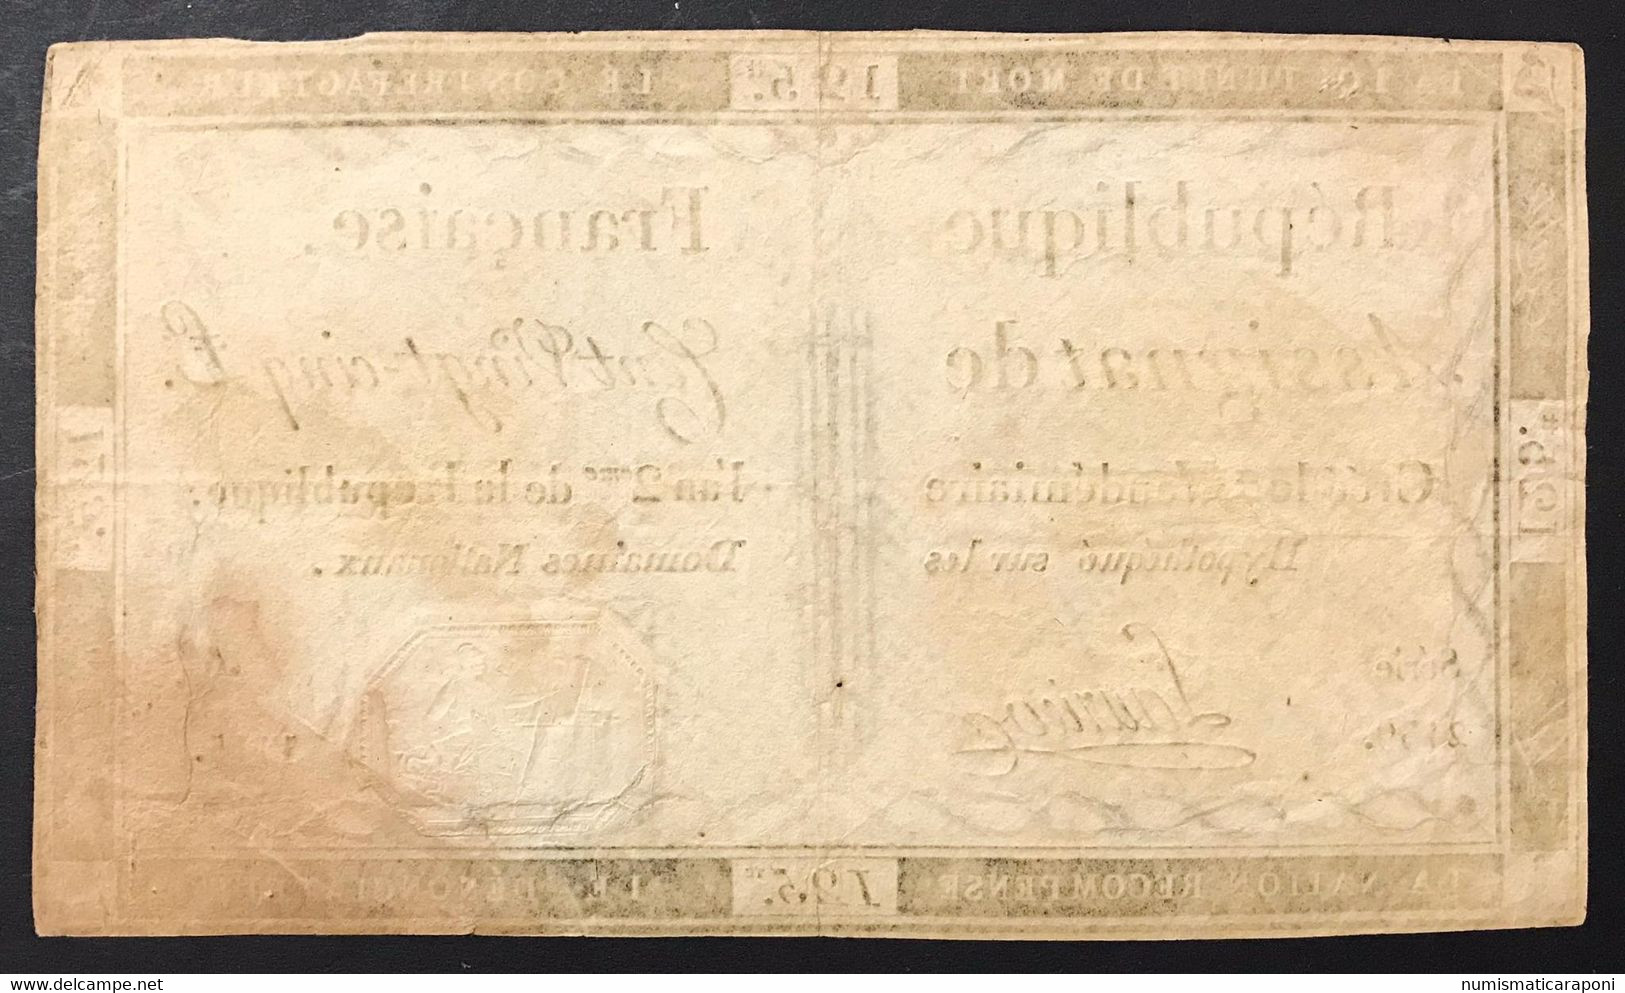 Francia France  Assignat De 125 Livres 7 Vendémiaire L'An 2 De La République Lotto.4335 - ...-1889 Circulated During XIXth